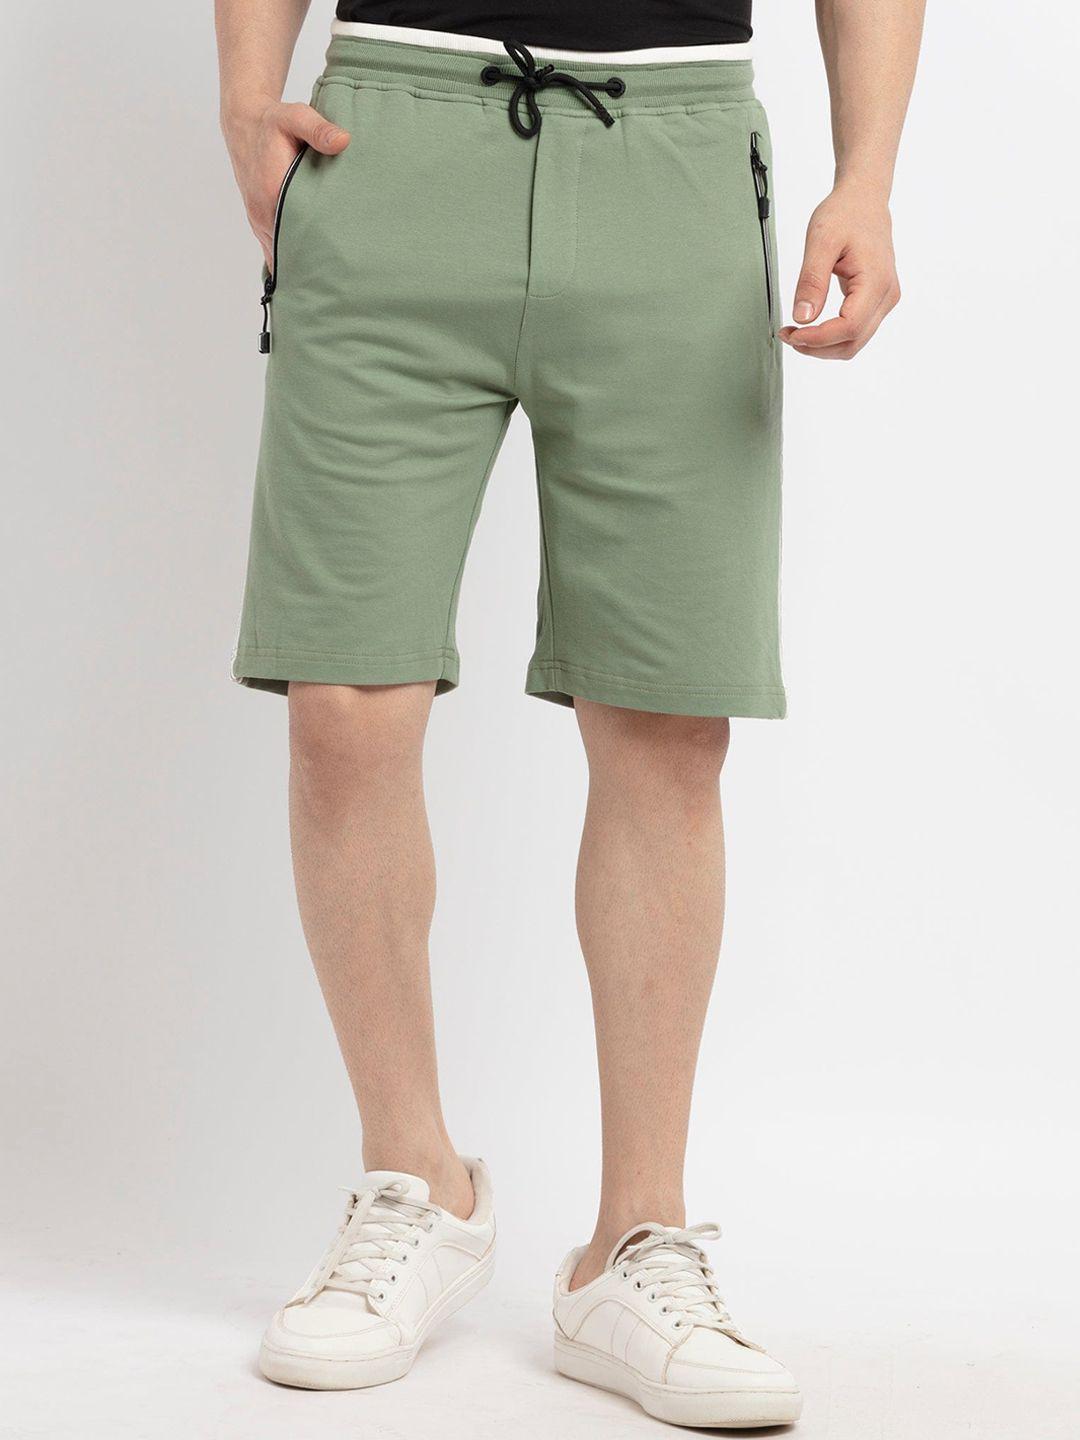 status quo men green solid mid rise regular shorts